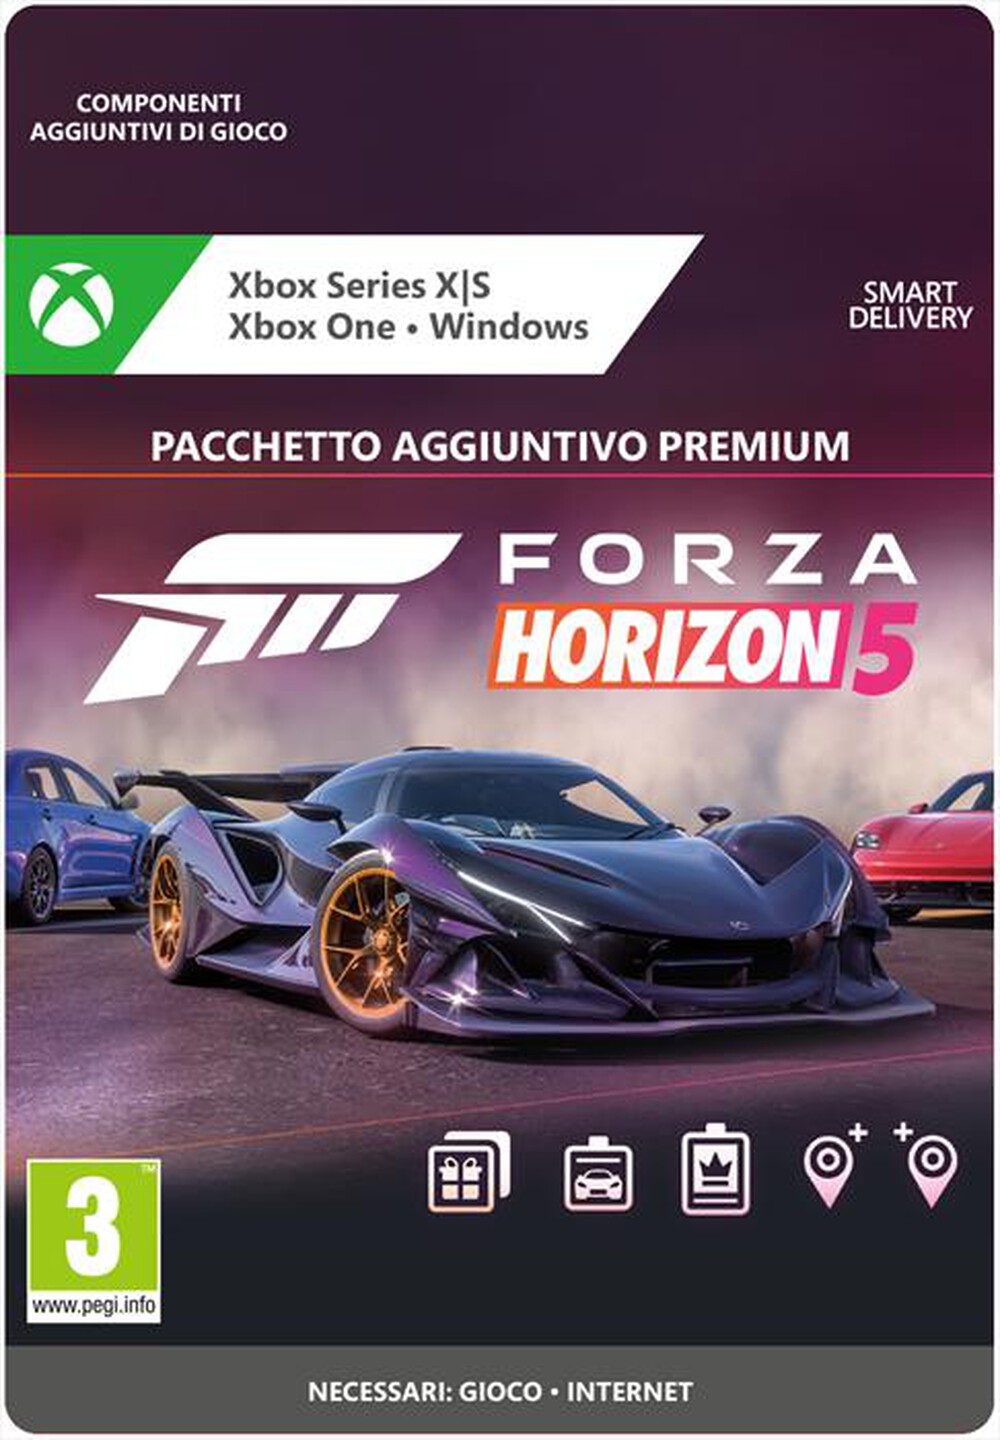 "MICROSOFT - Forza Horizon 5: Premium Addons Bundle"